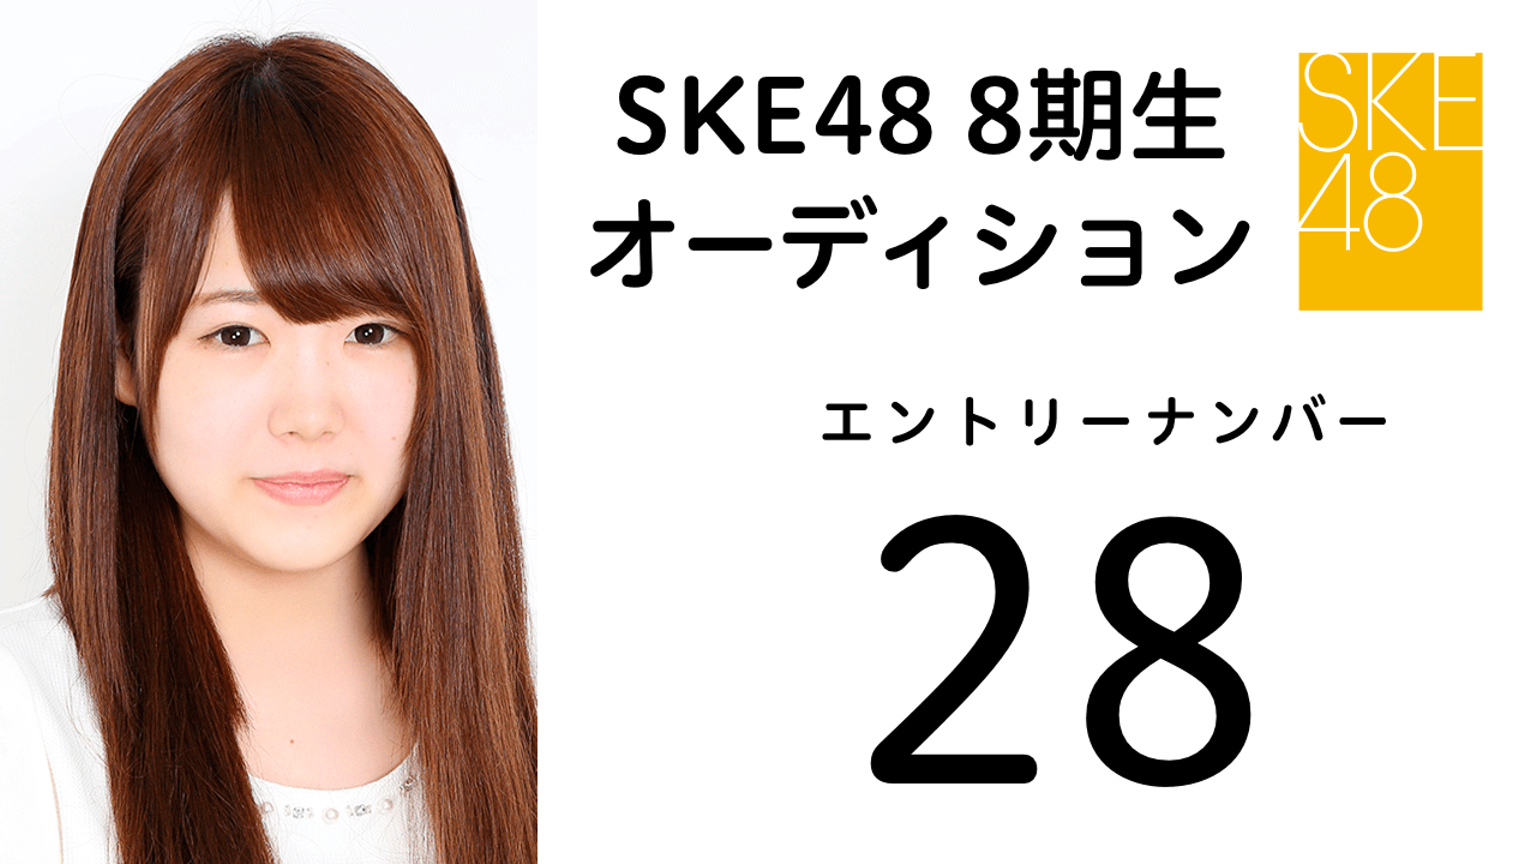 SKE48 第8期受験生 エントリーナンバー28番